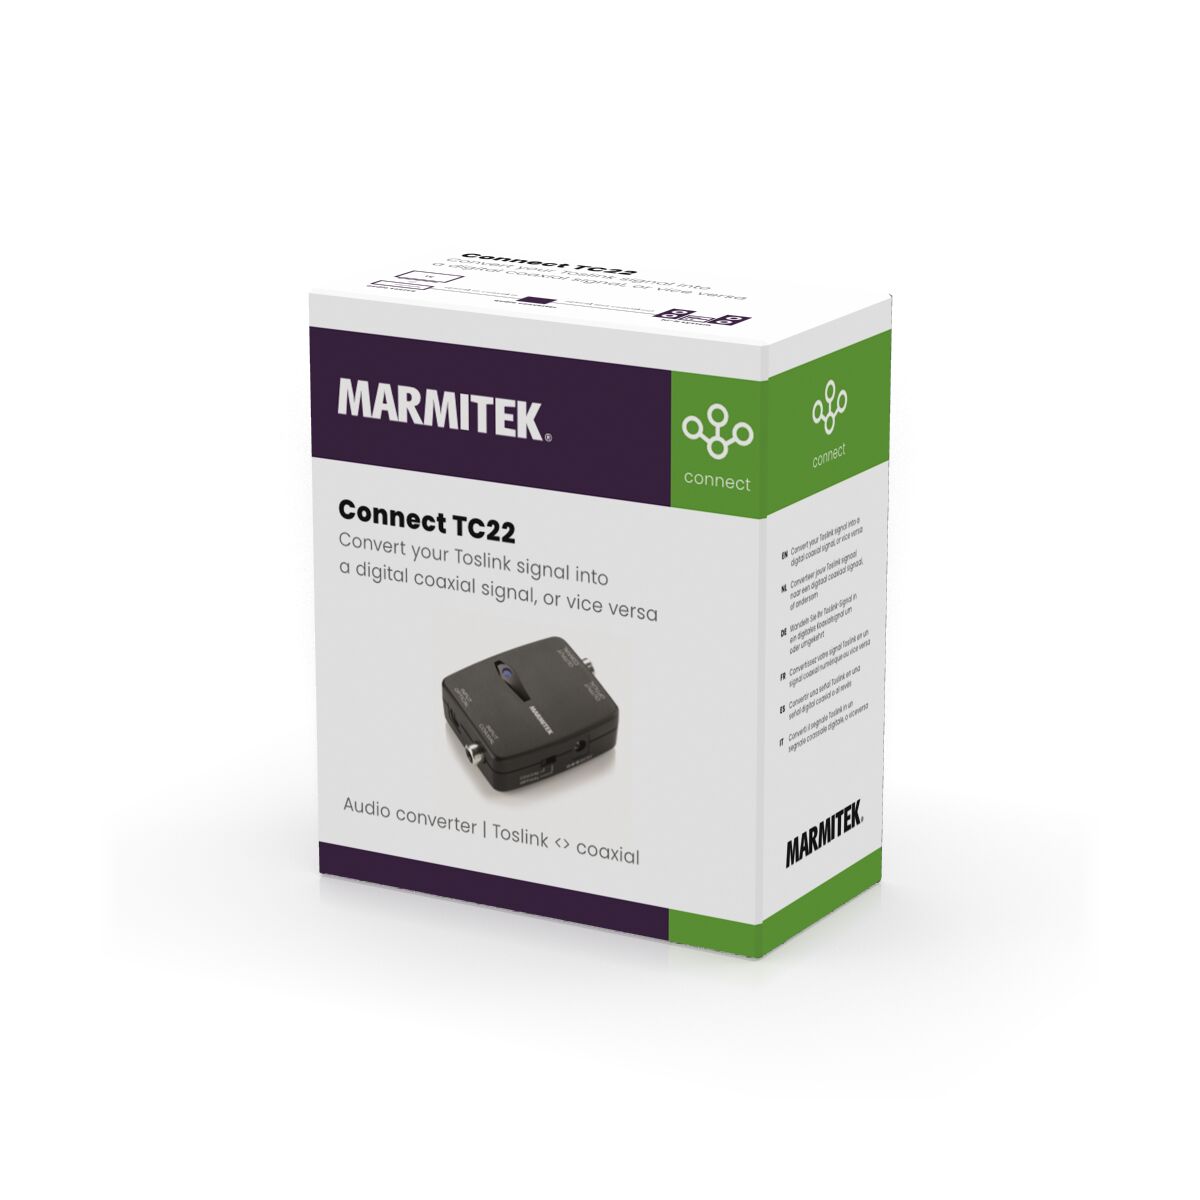 Connect TC22 - Audio converter - DAC - Toslink to coaxial - 3D Packshot Image | Marmitek